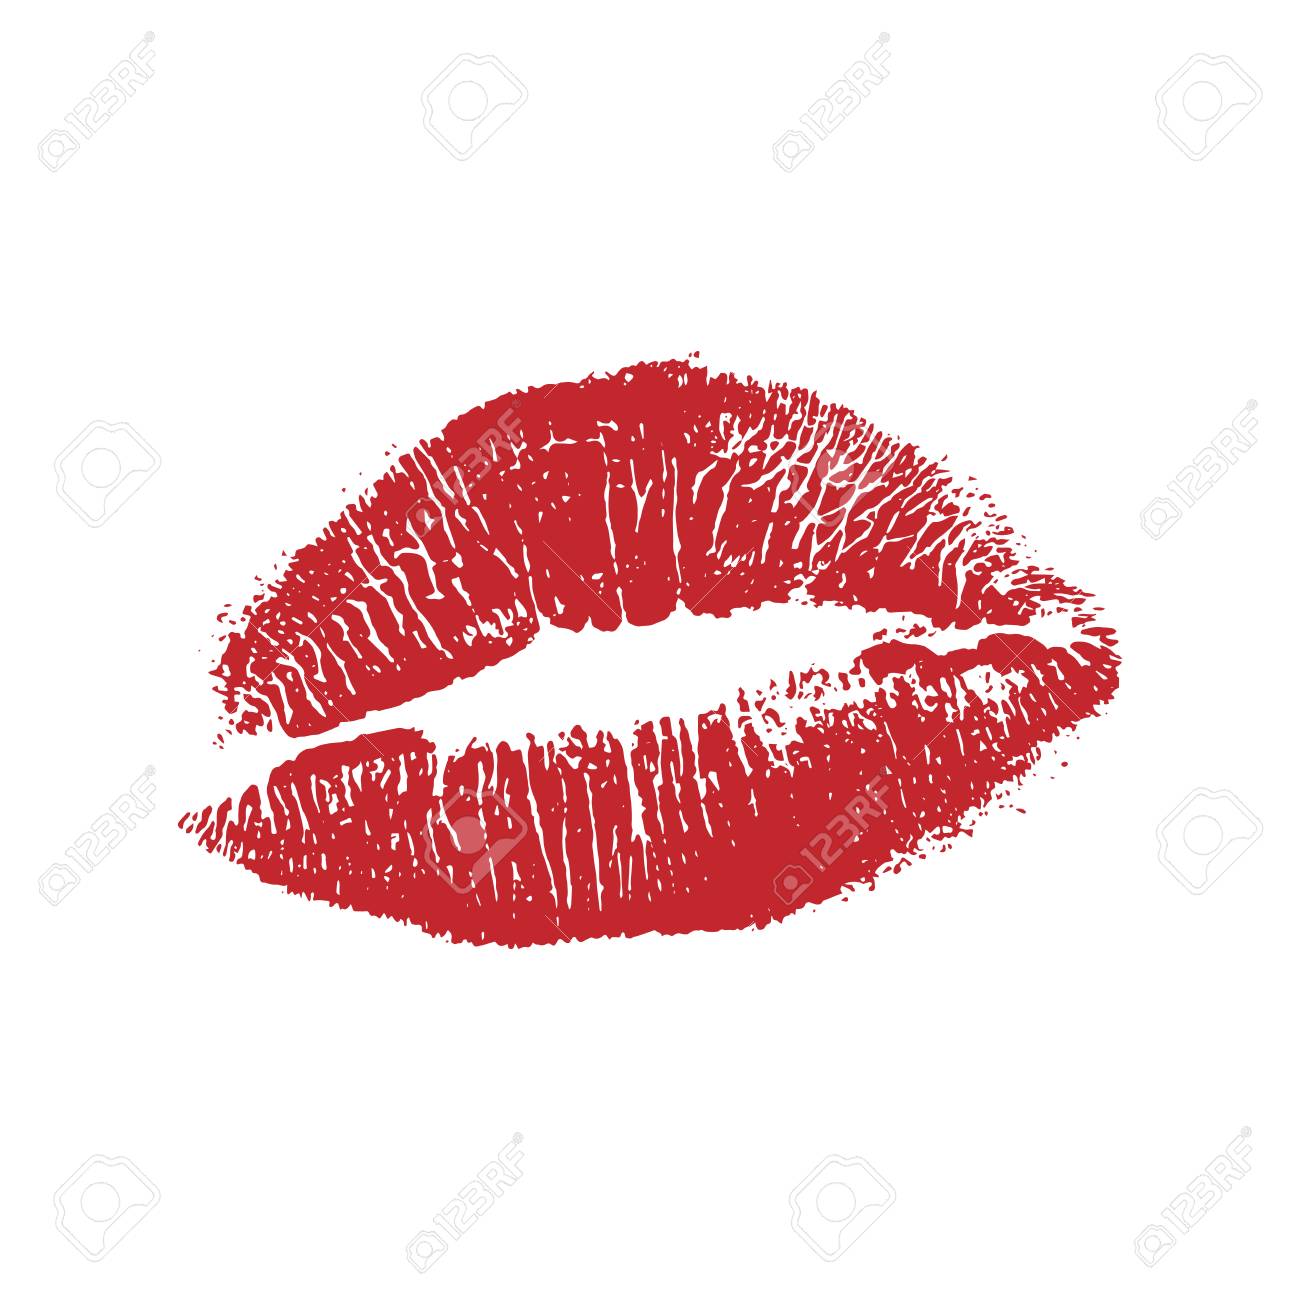 akon share red lipstick kiss marks photos